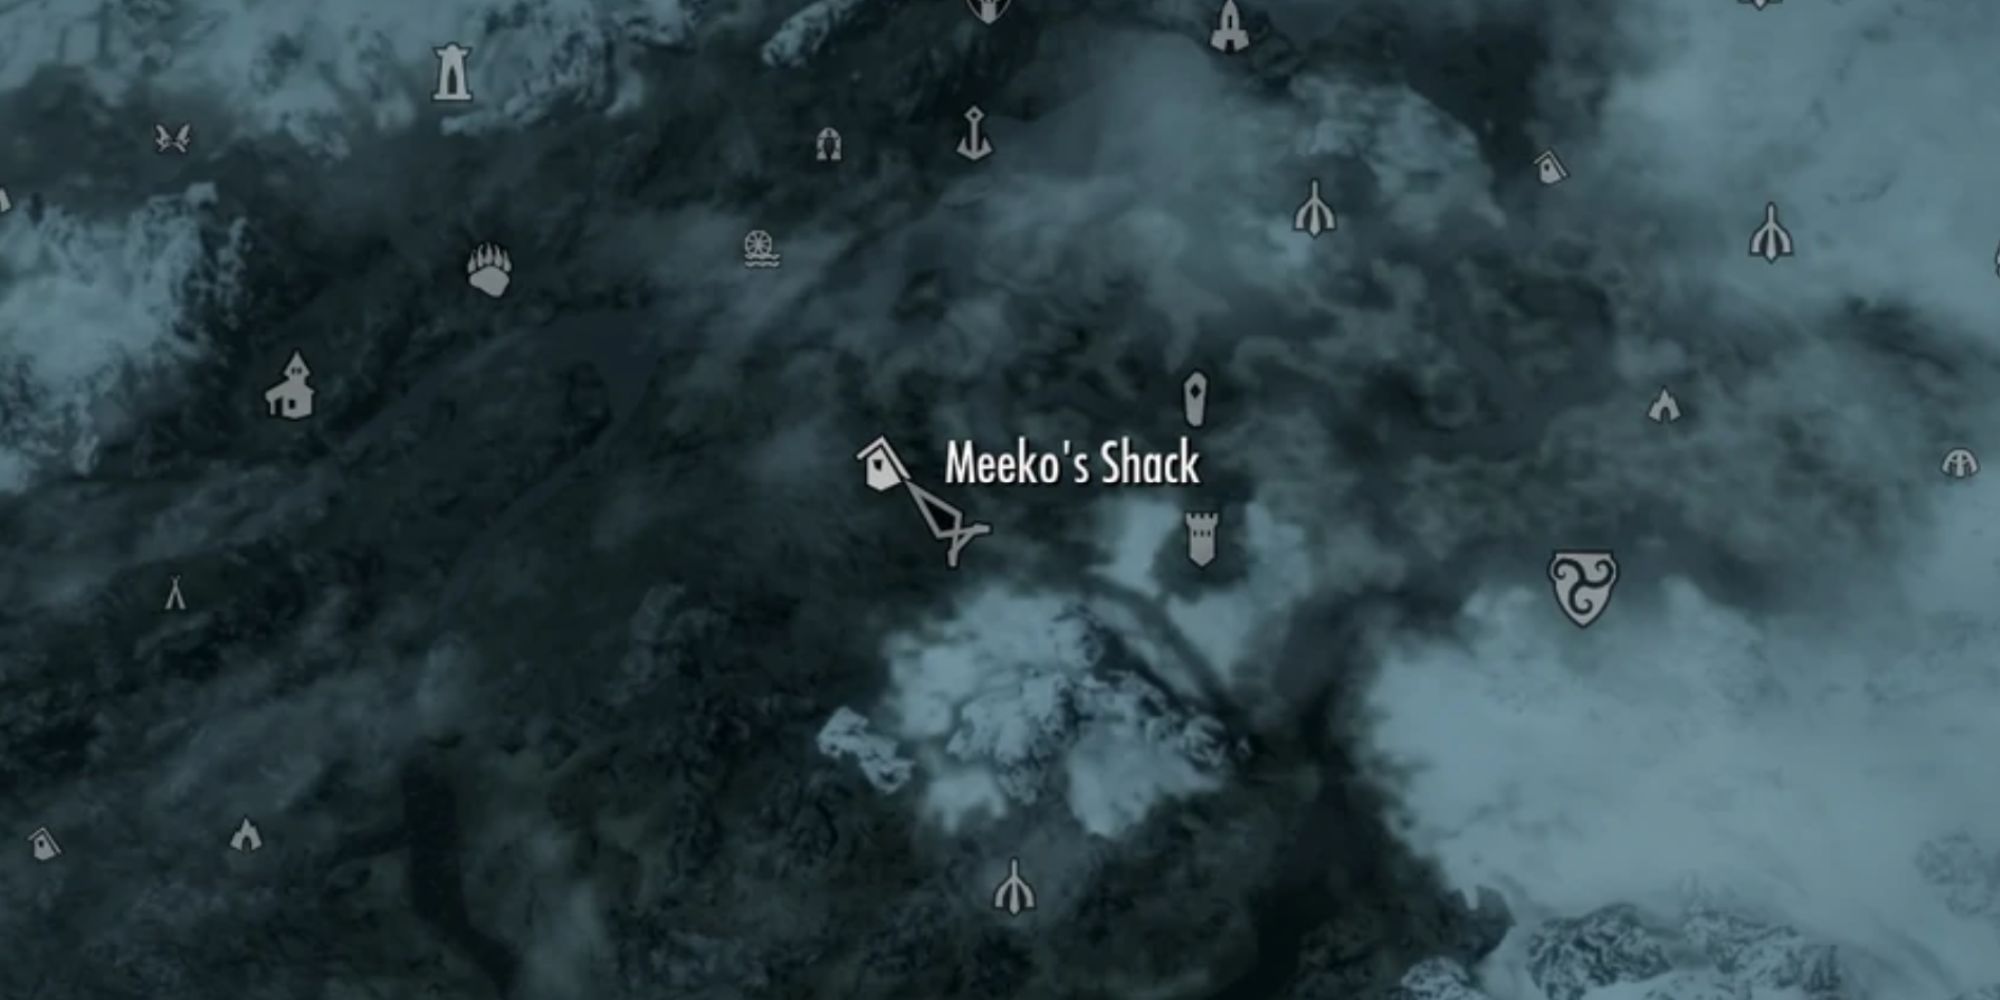 Skyrim Meeko's Shack On The Map